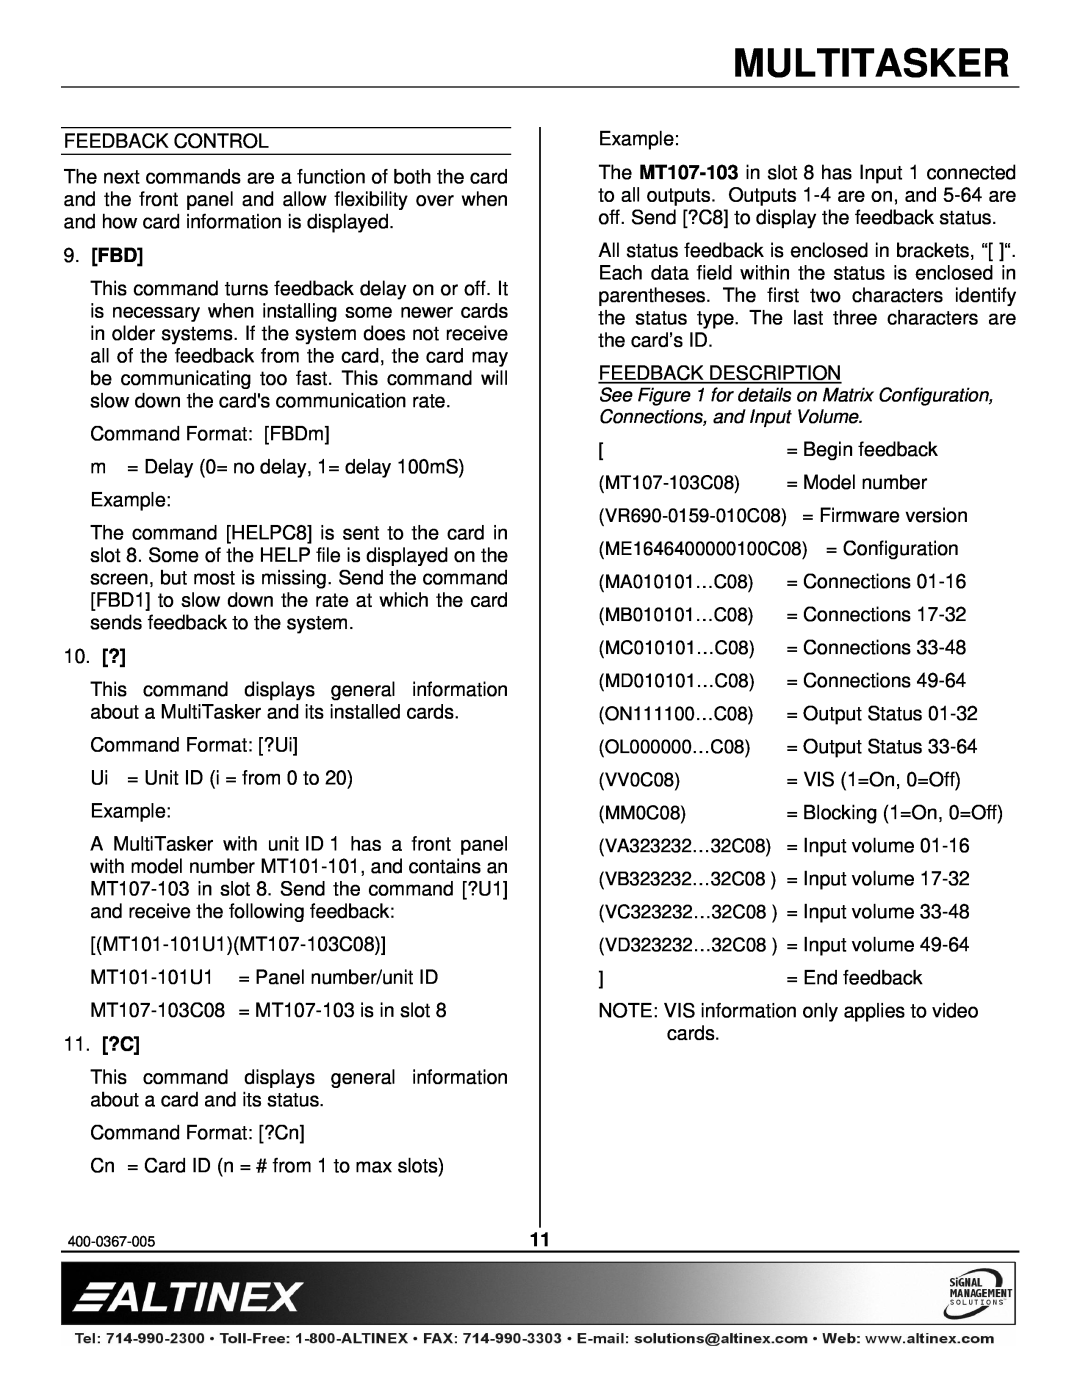 Altinex MT107-103 manual Fbd, 10. ?, 11. ?C, Multitasker 